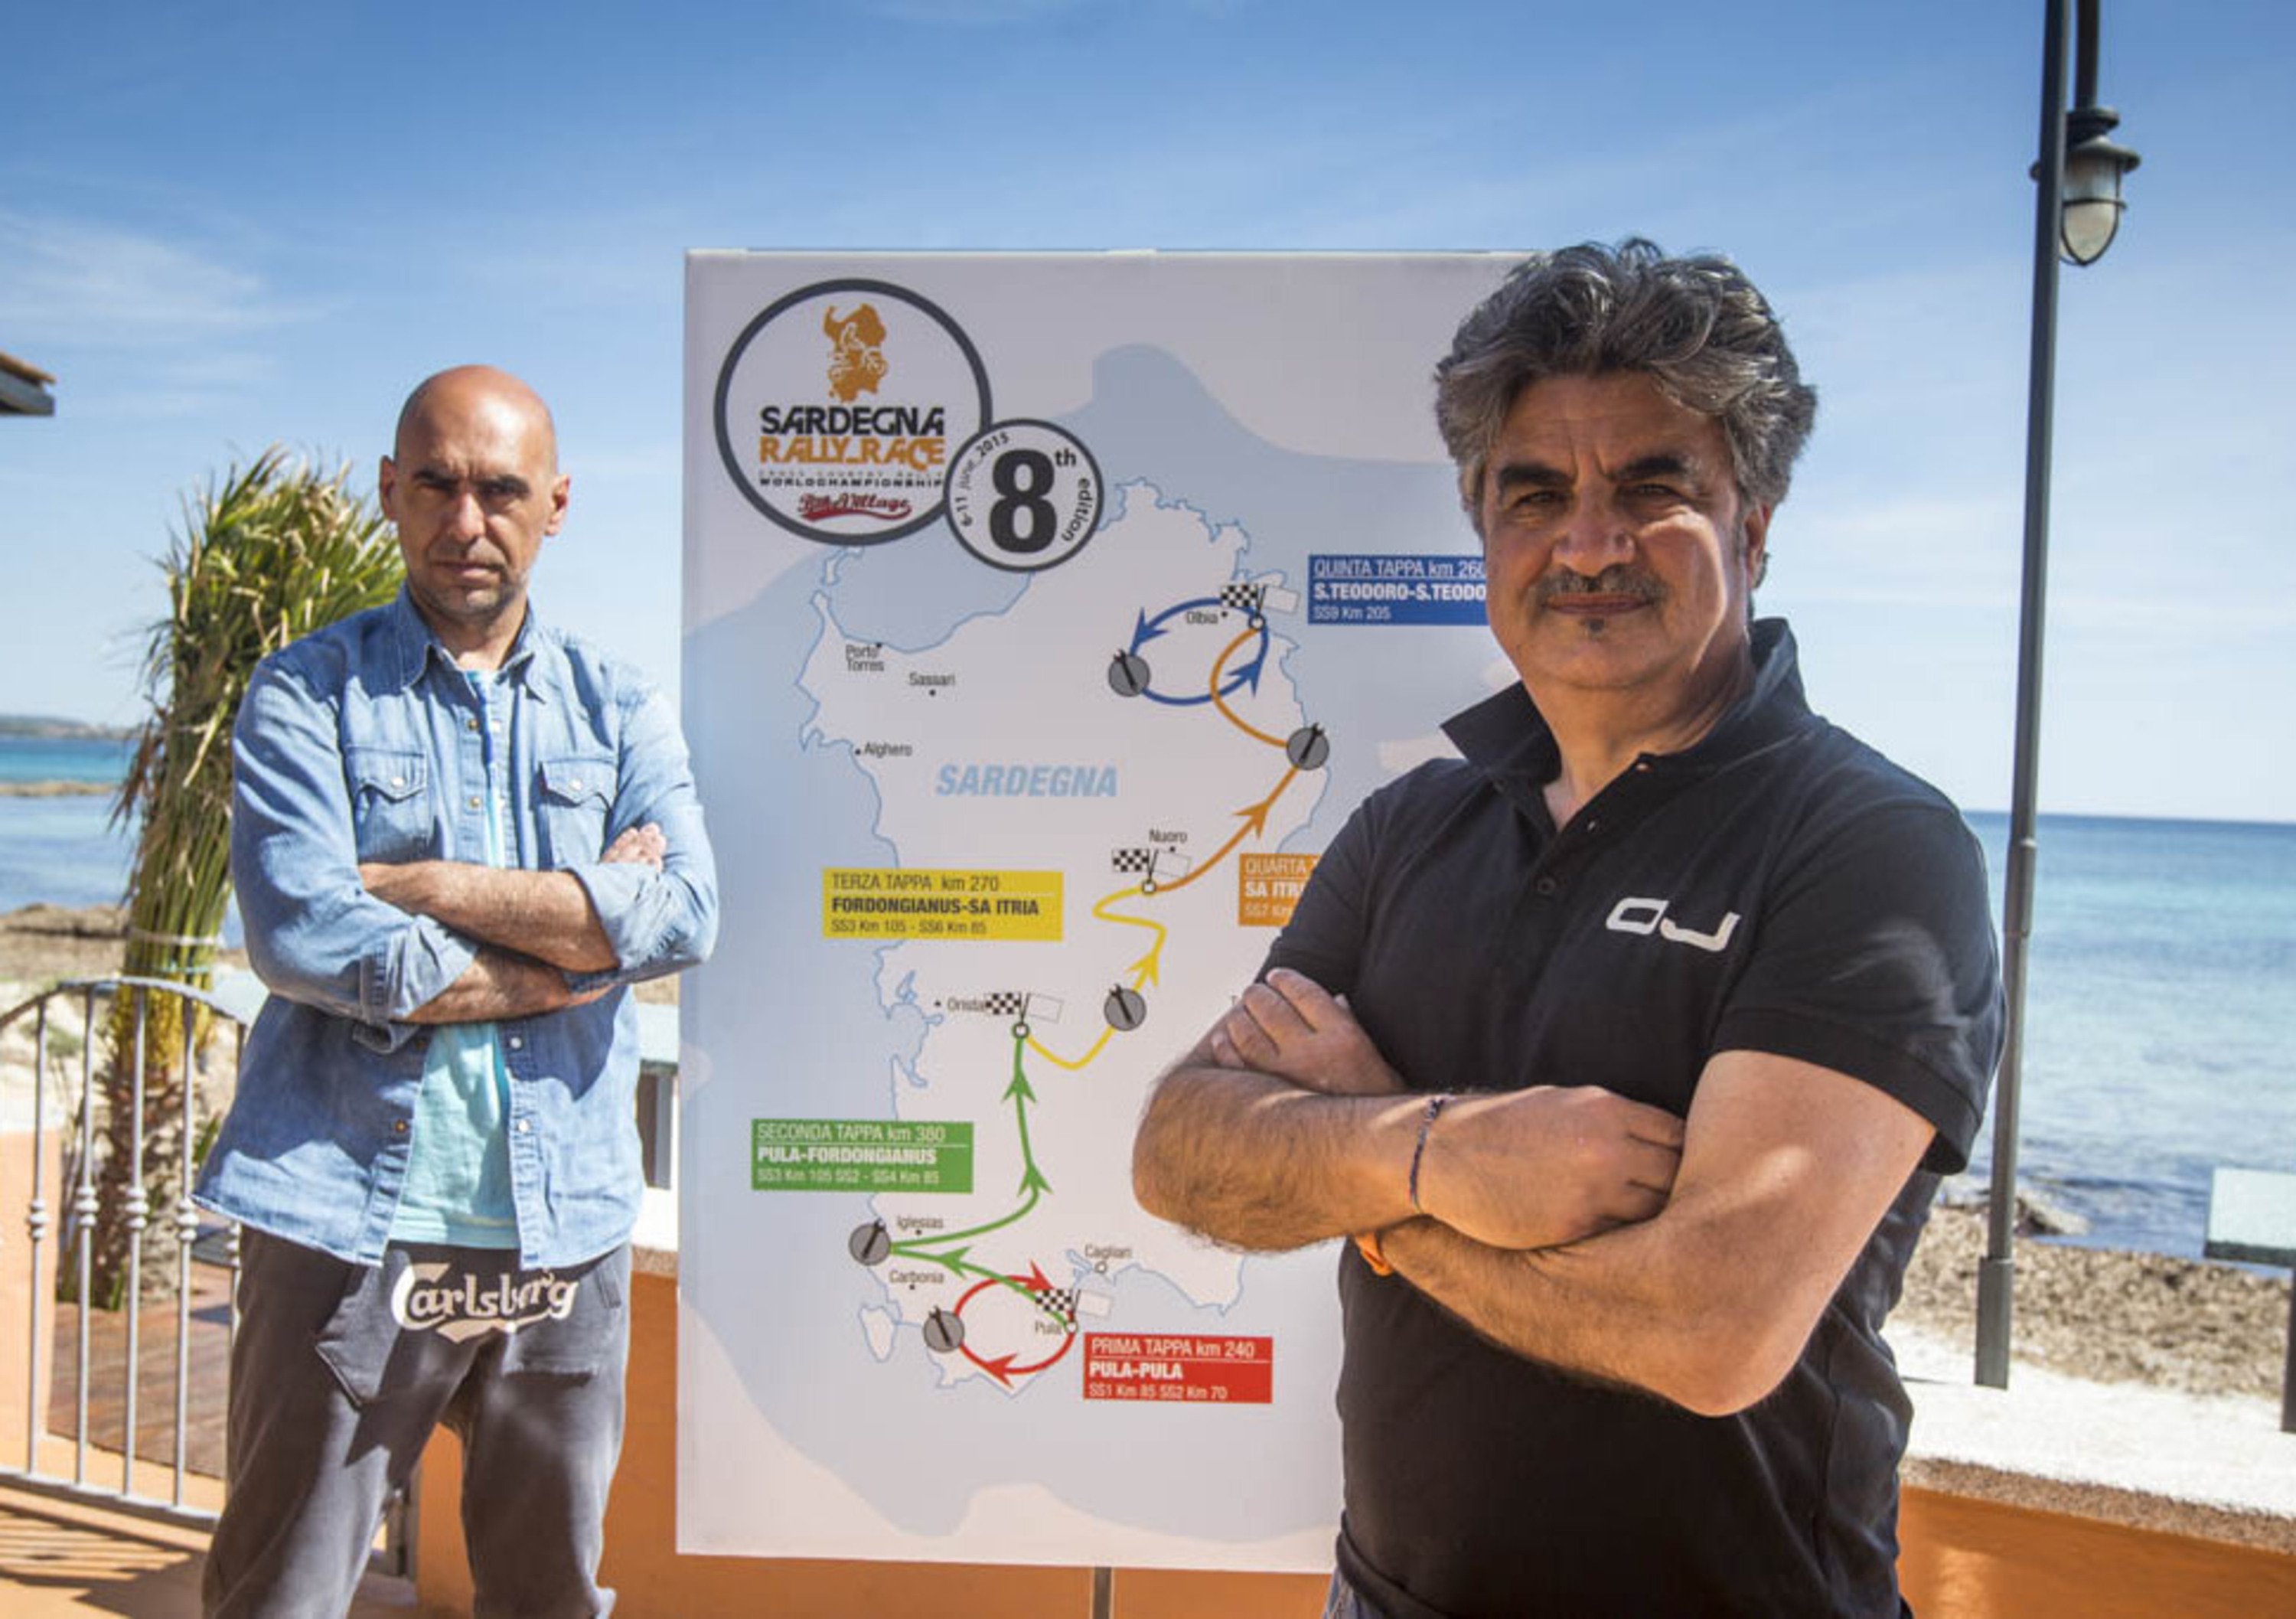 Sardegna Rally Race 2015 is coming